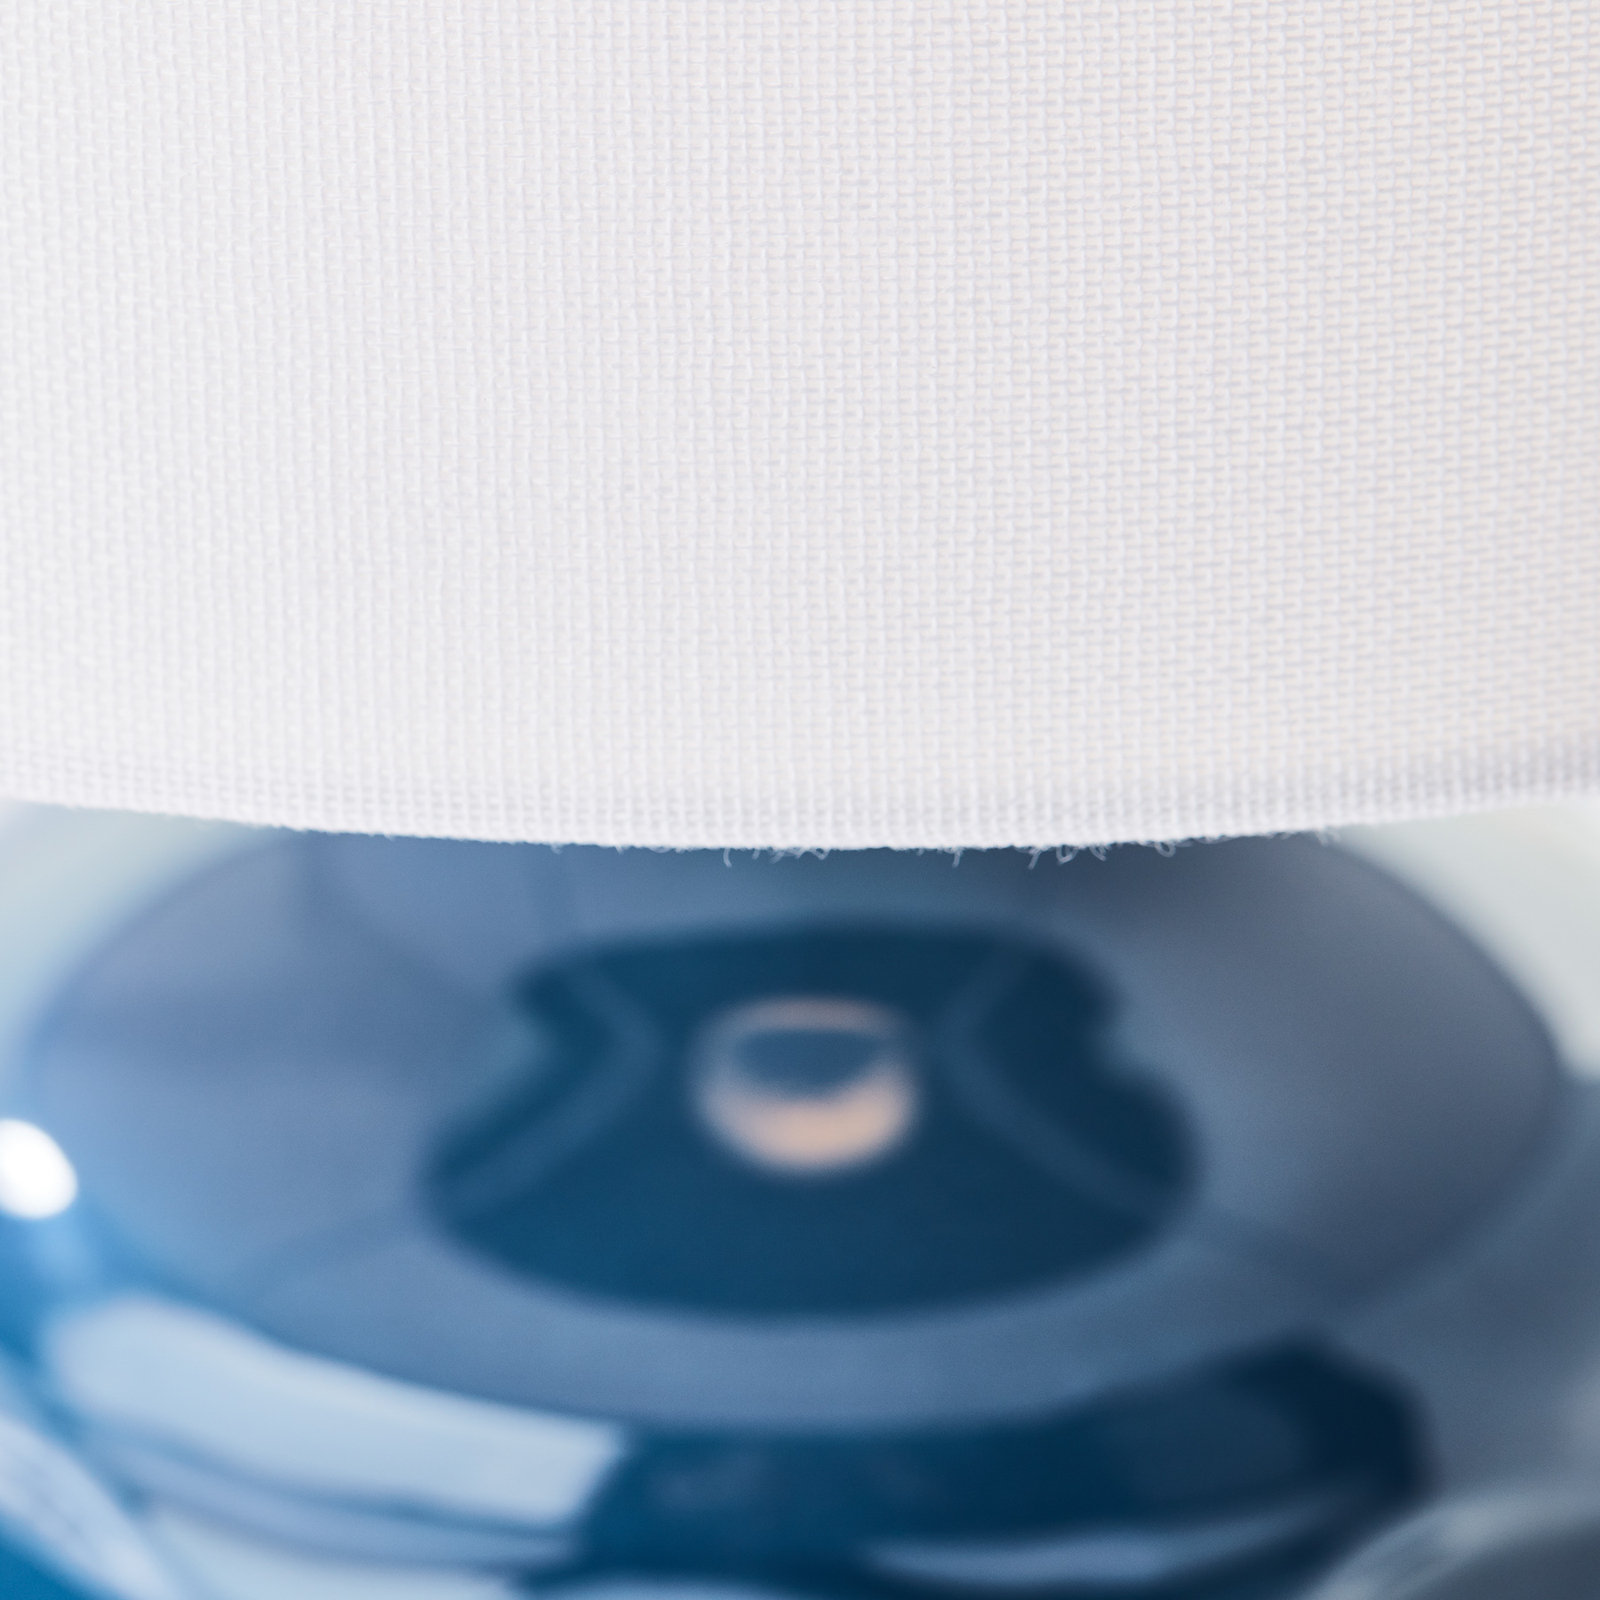 Ilysa table lamp, white fabric, blue ceramic base